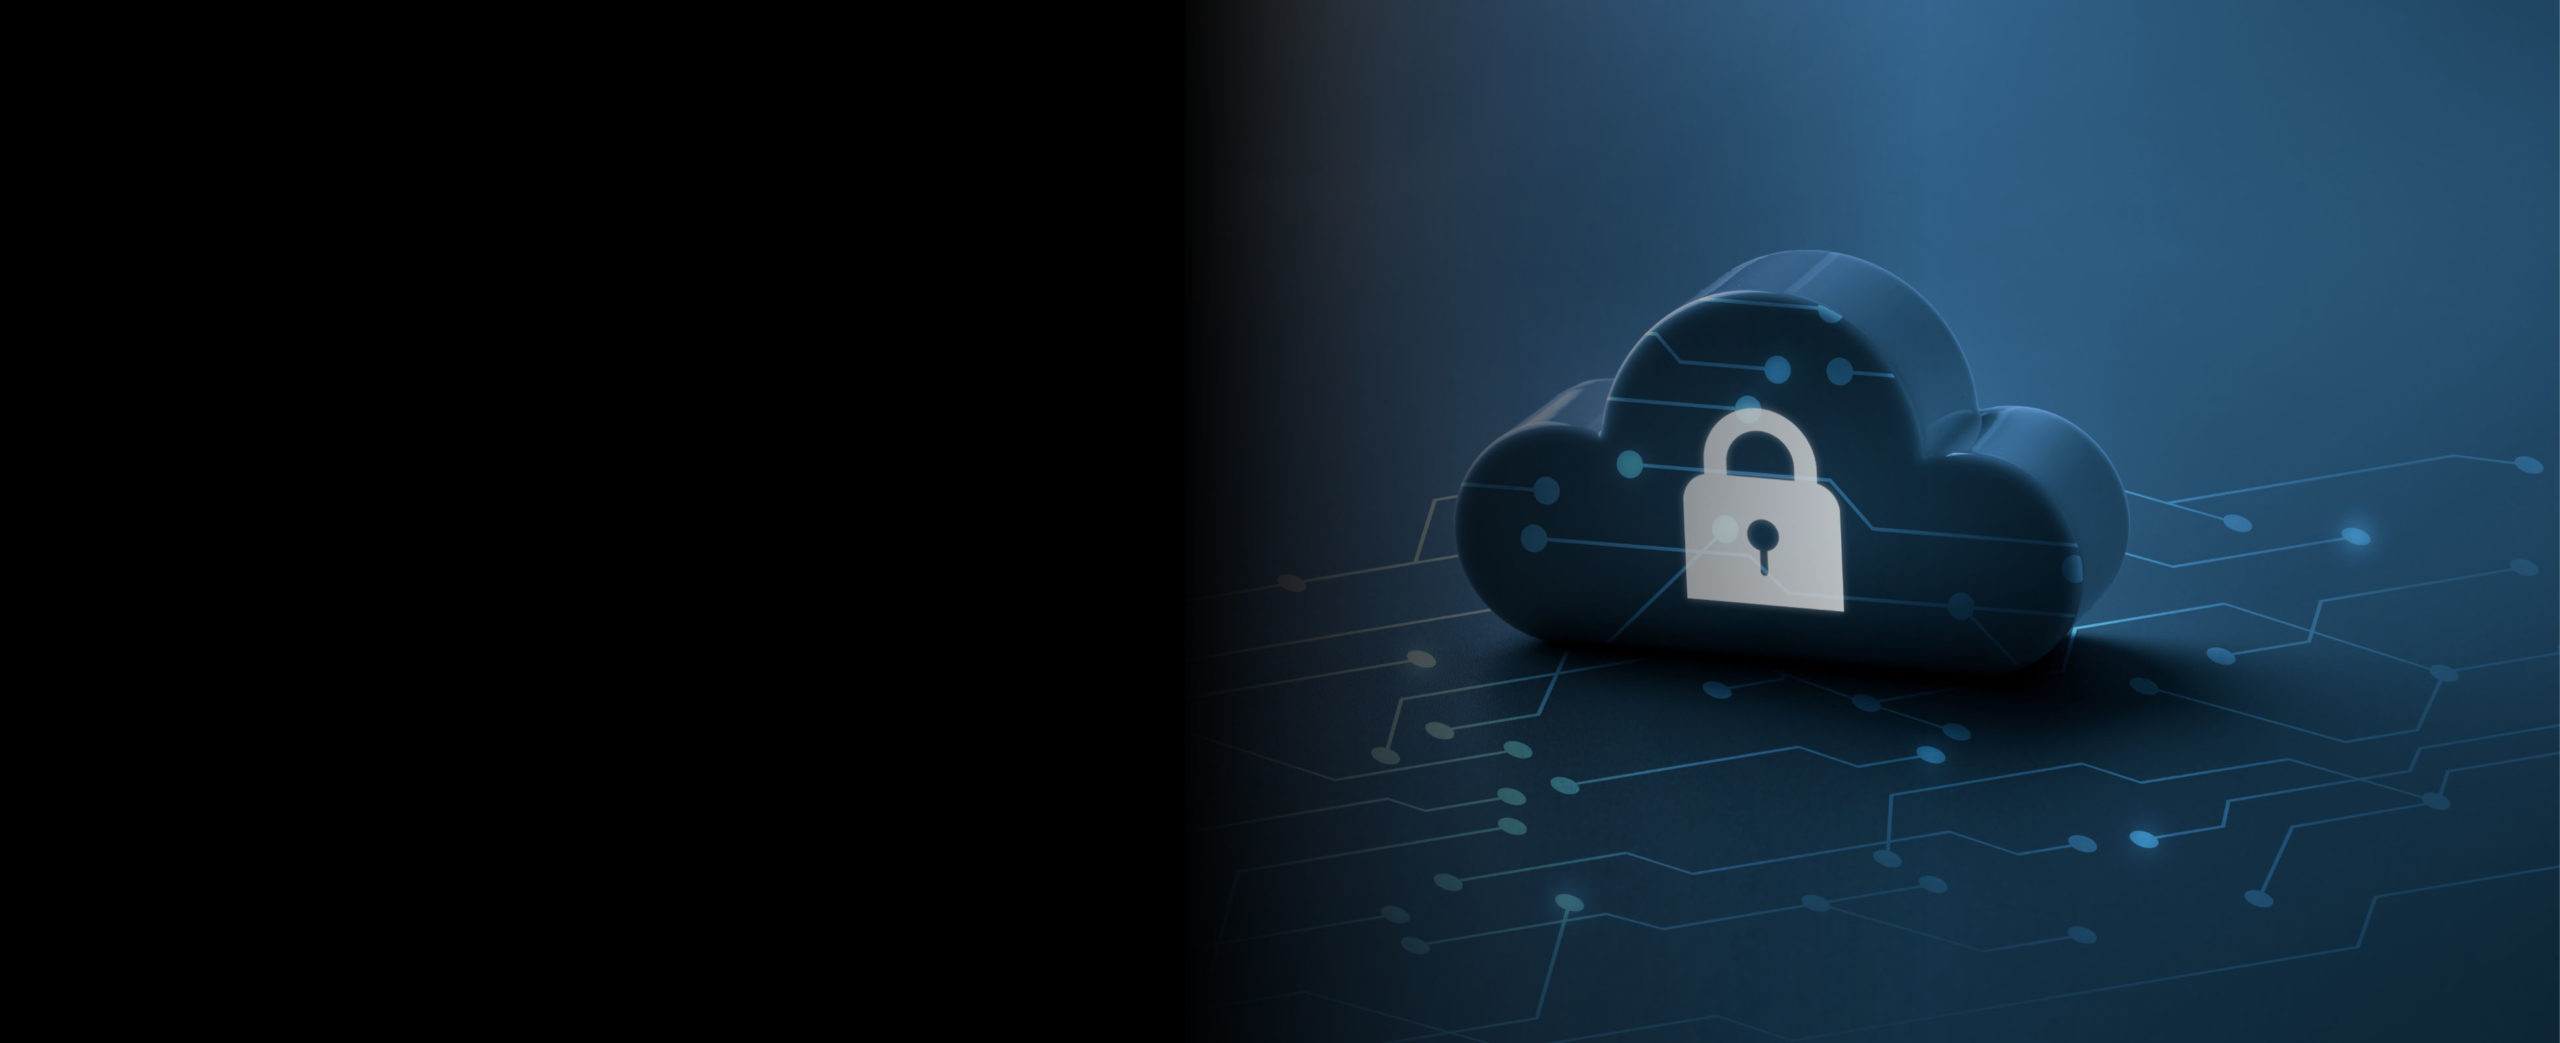 Cloud Security Solutions - ReliaQuest